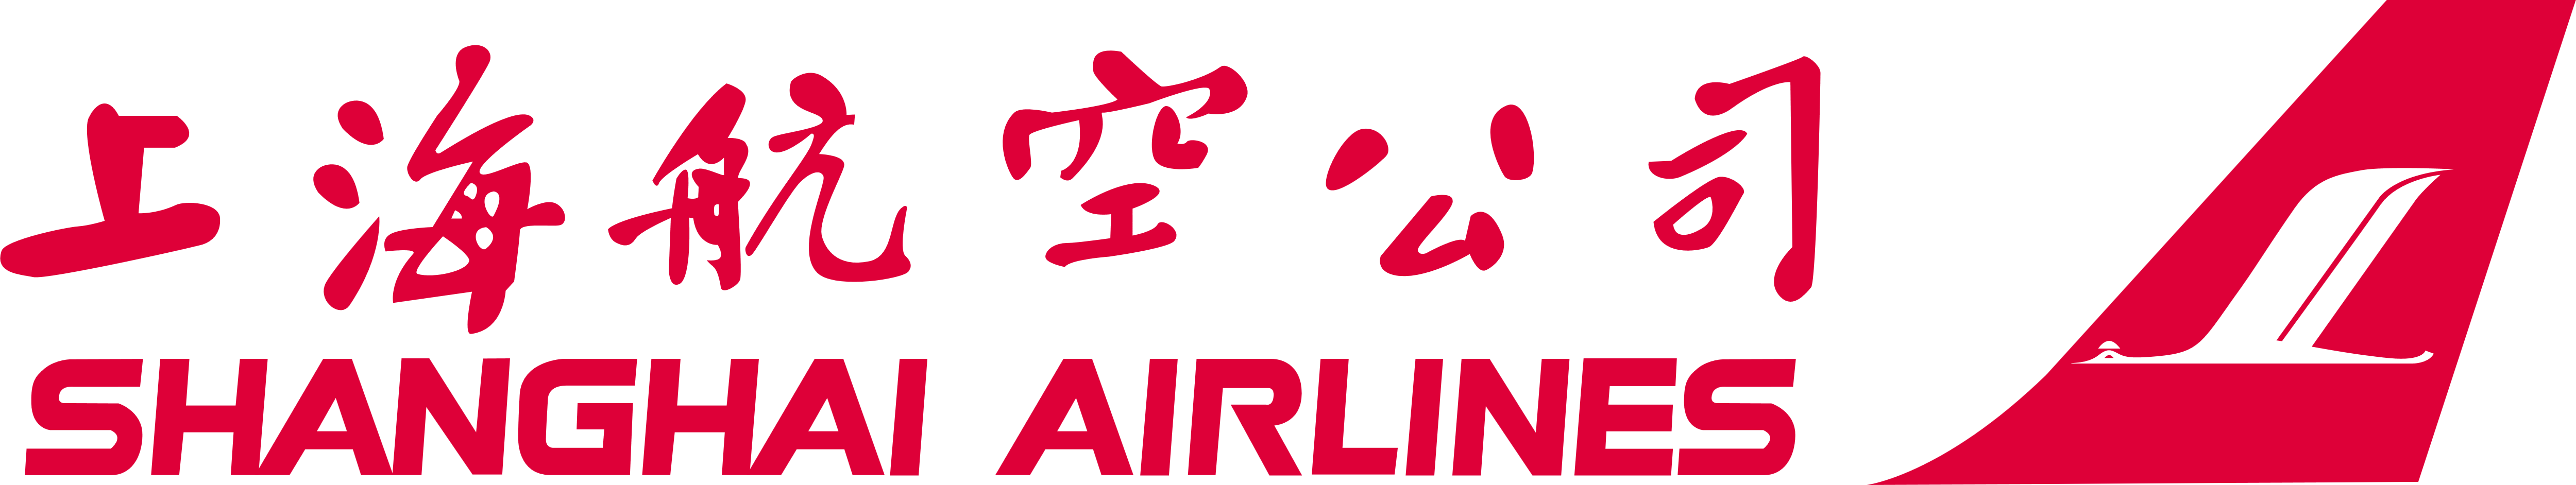 Image result for Shanghai Airlines logo